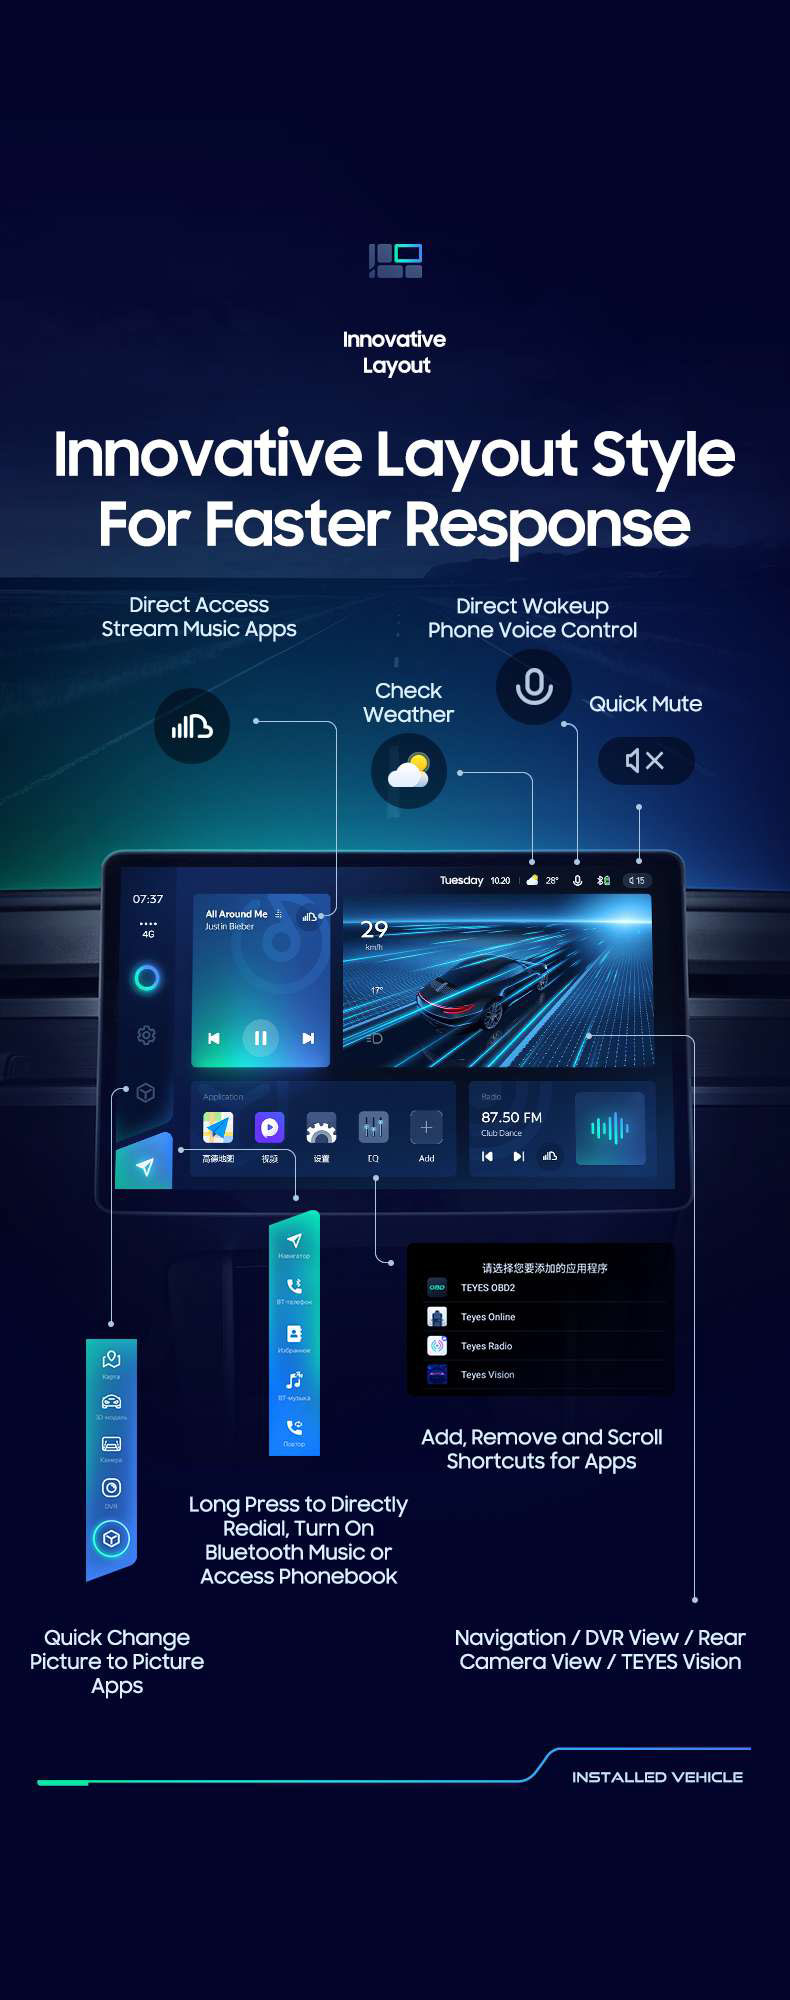 TEYES CC3 Android 10 OS Car Multimedia Head Unit